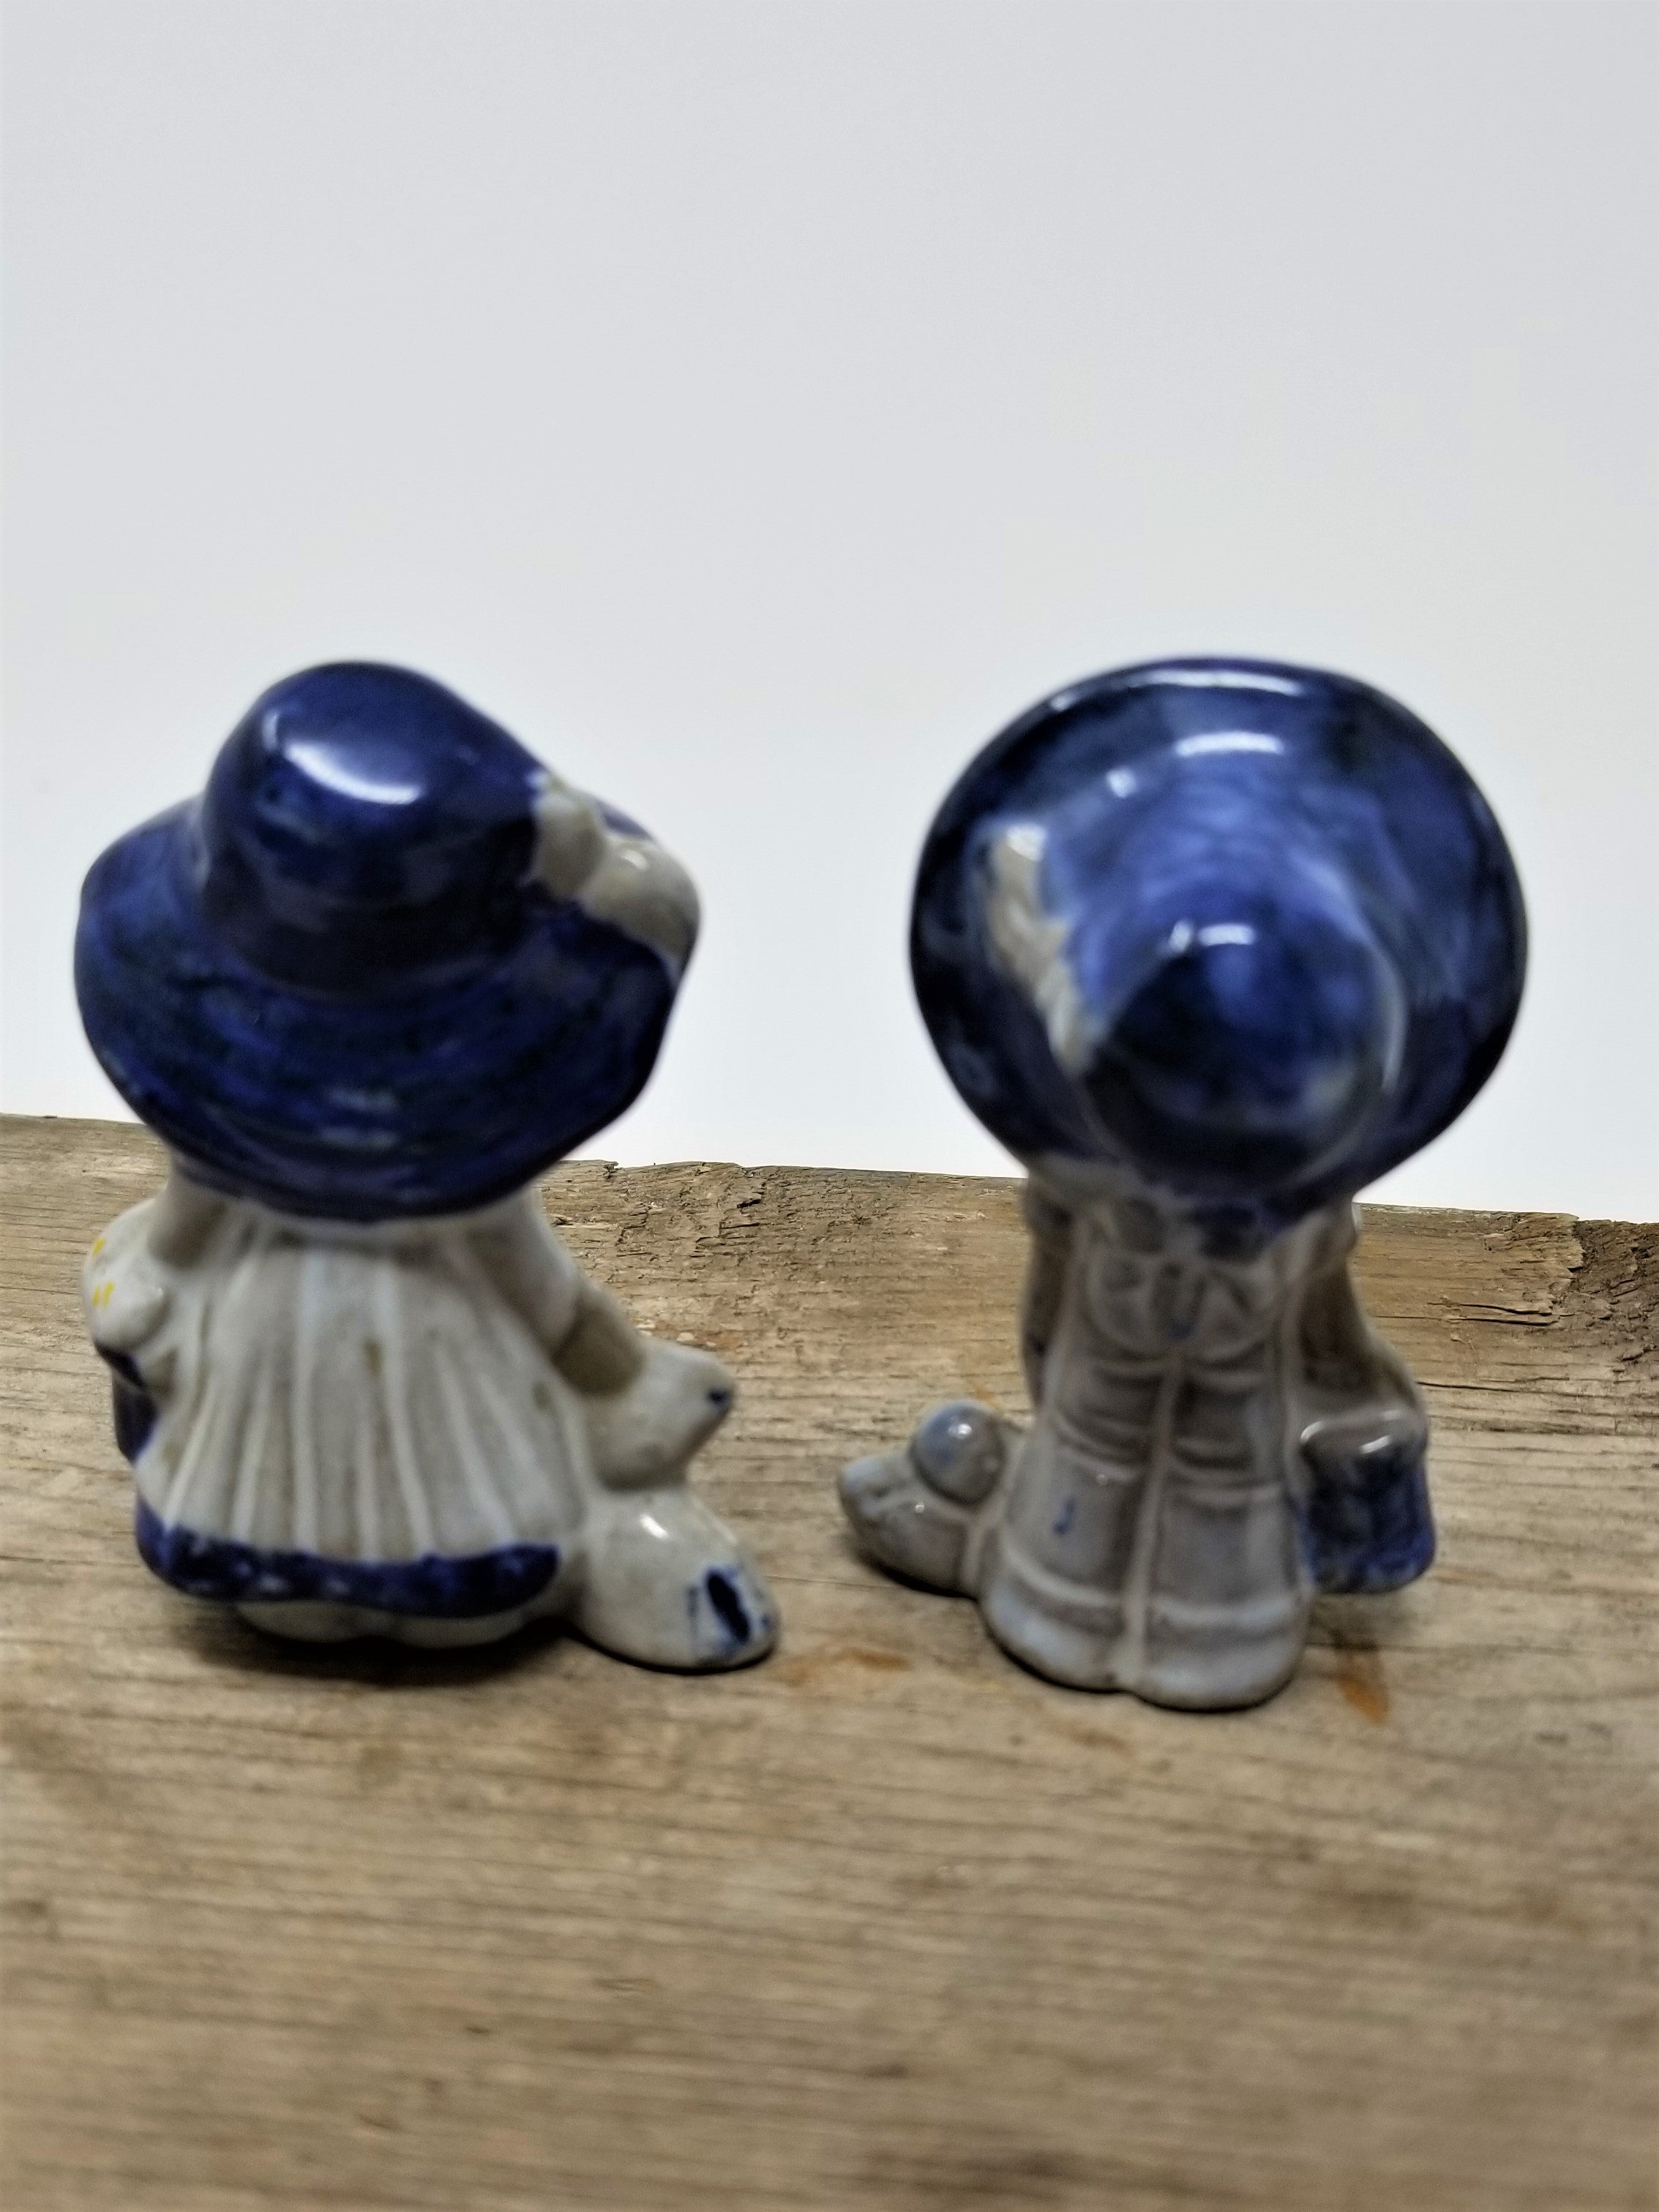 Cute Vintage Clay Glazed Figurines Miniatures